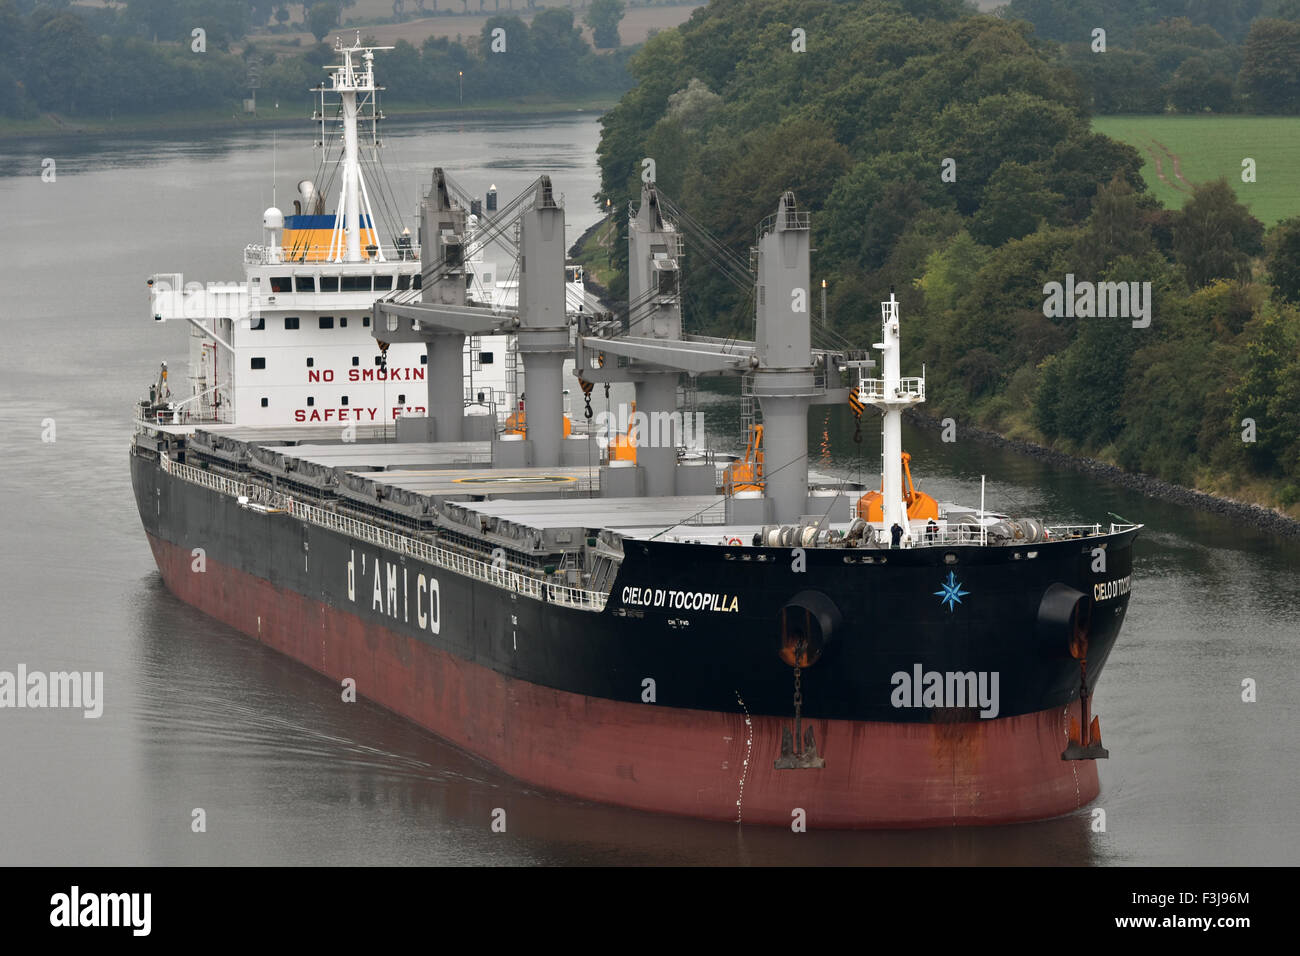 Handysize bulkcarrier Cielo di Tocopilla Stock Photo